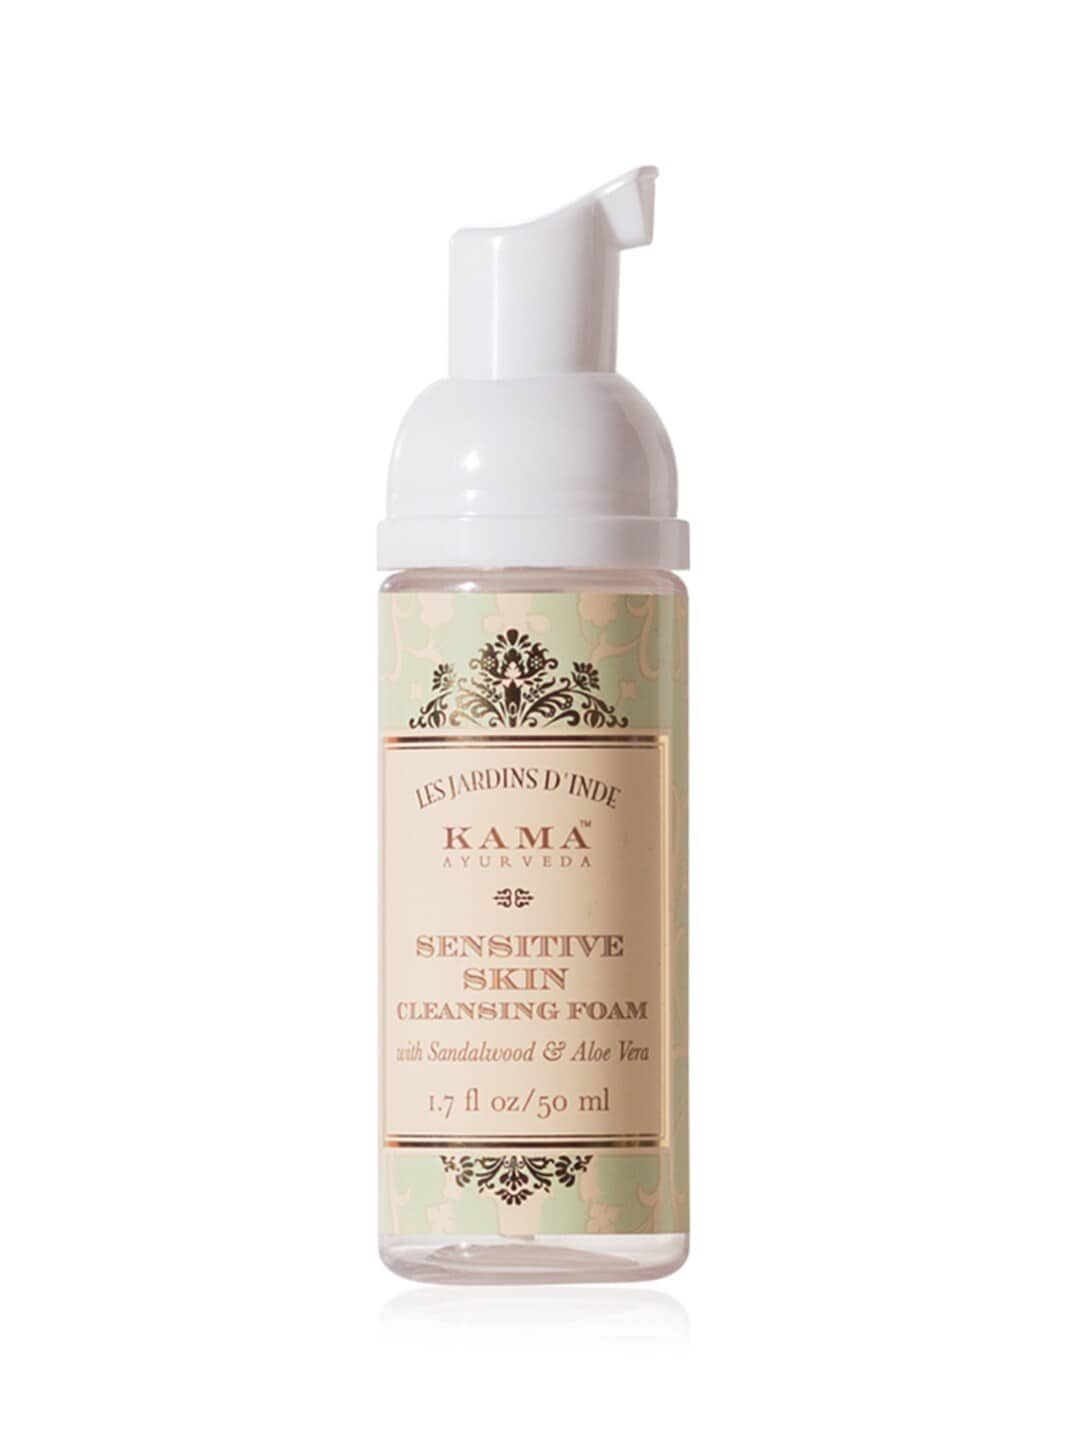 KAMA AYURVEDA Sustainable Unisex Sensitive Skin Cleansing Foam with Sandalwood  Aloe Vera 50 ml Price in India